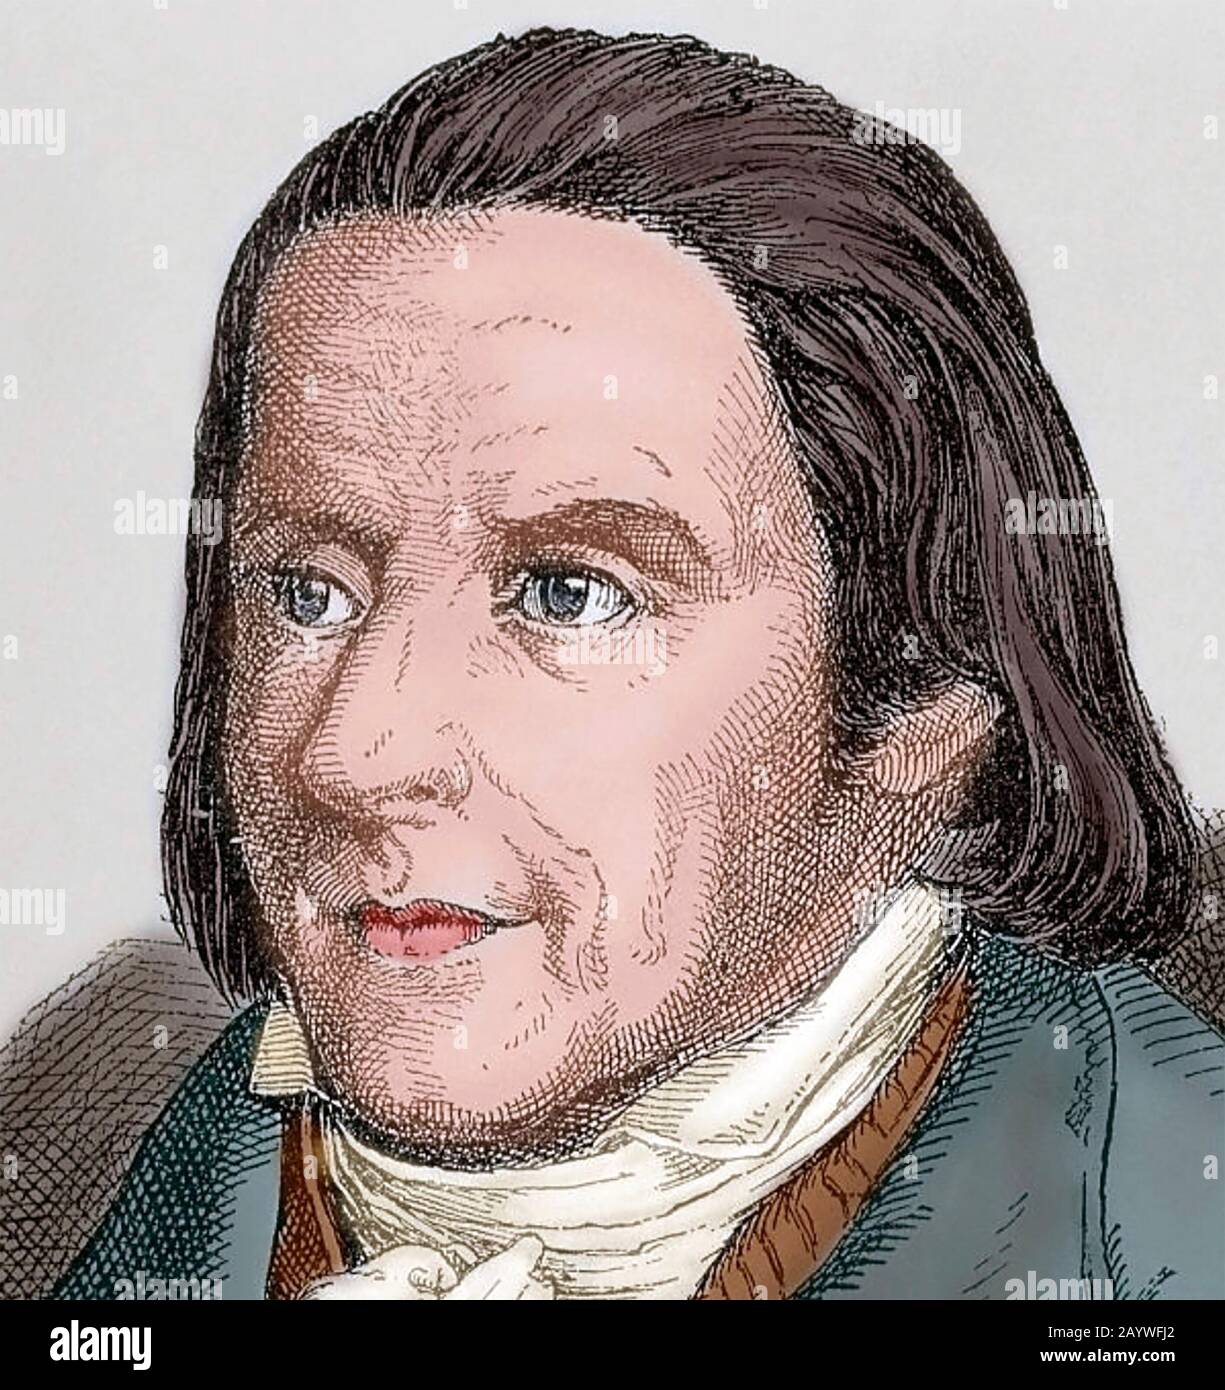 JOHANN PESTALOZZI (1746-1827) Swiss pedagogue and educational reformer. Contemporary coloured engraving. Stock Photo